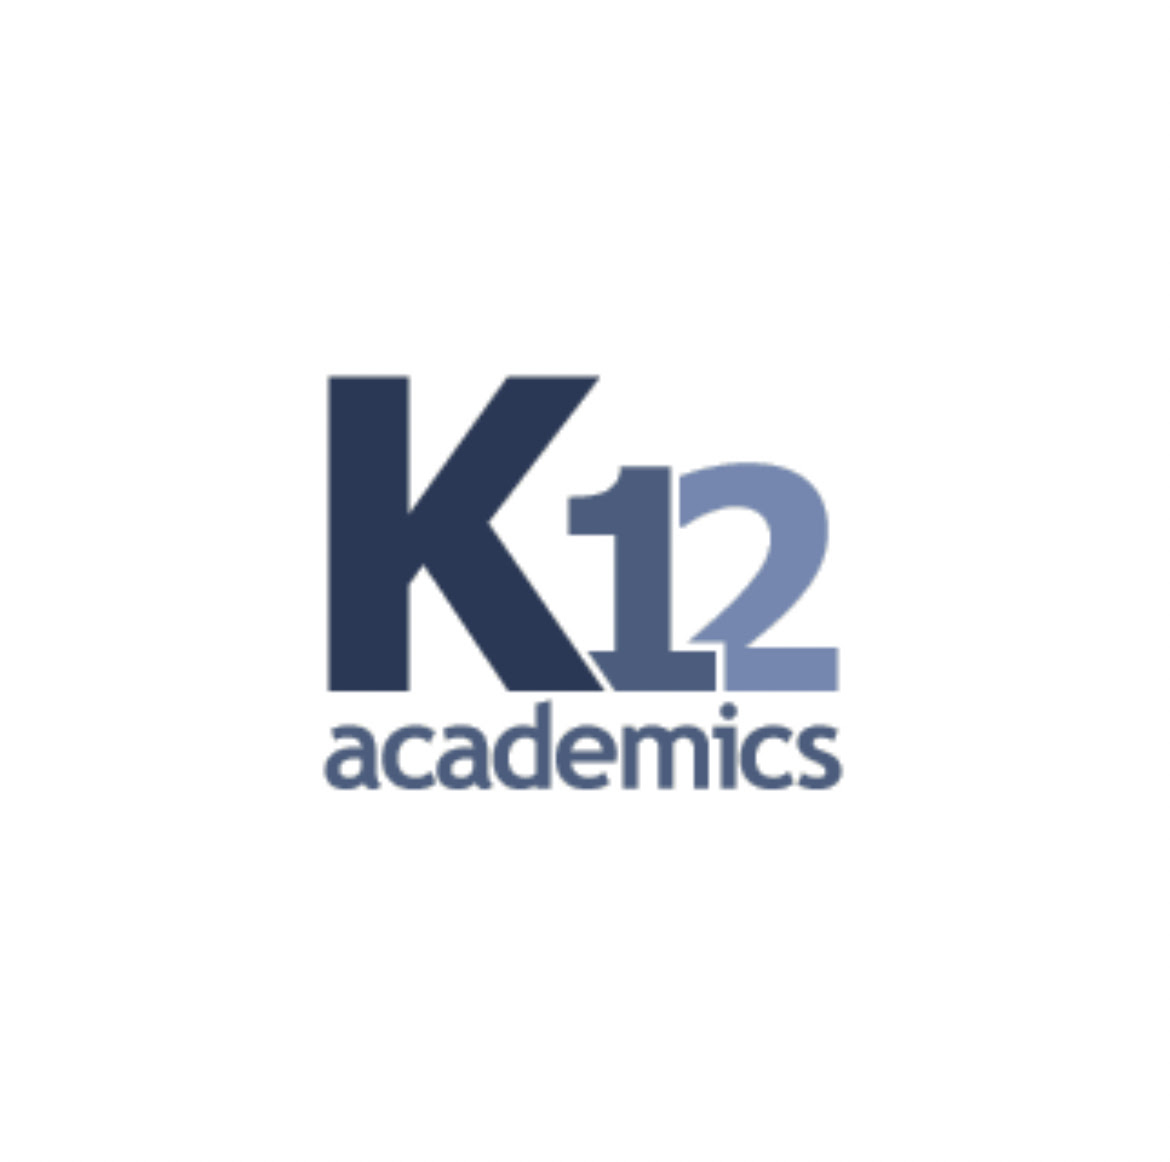 k12academics